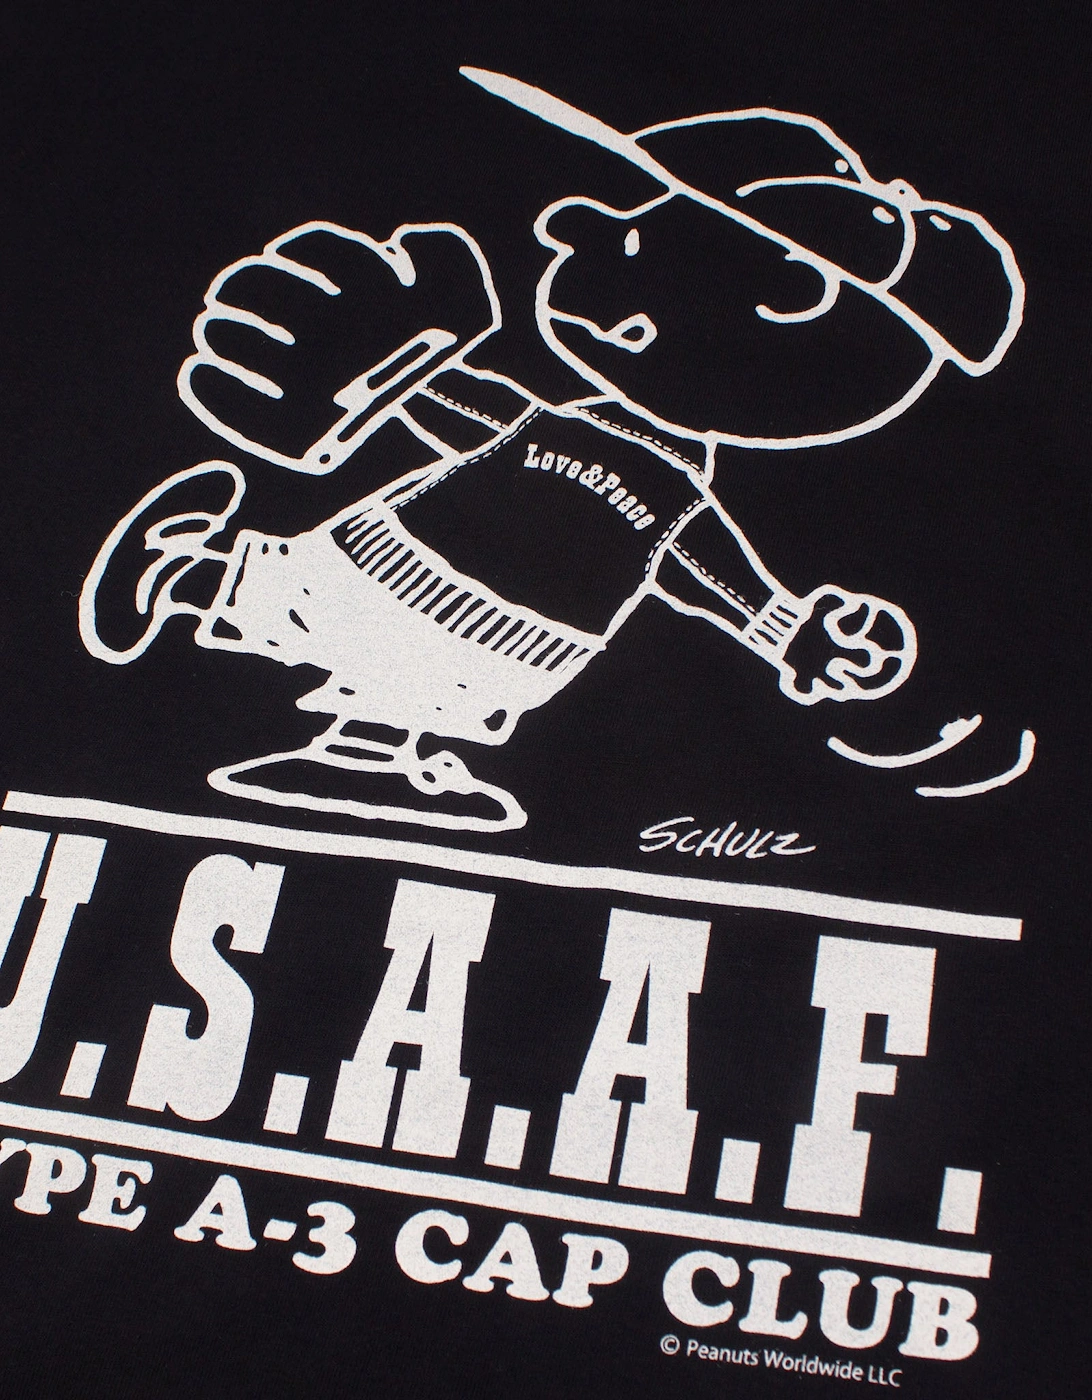 Peanuts USAAF A-3 Cap Club T-shirt - Black